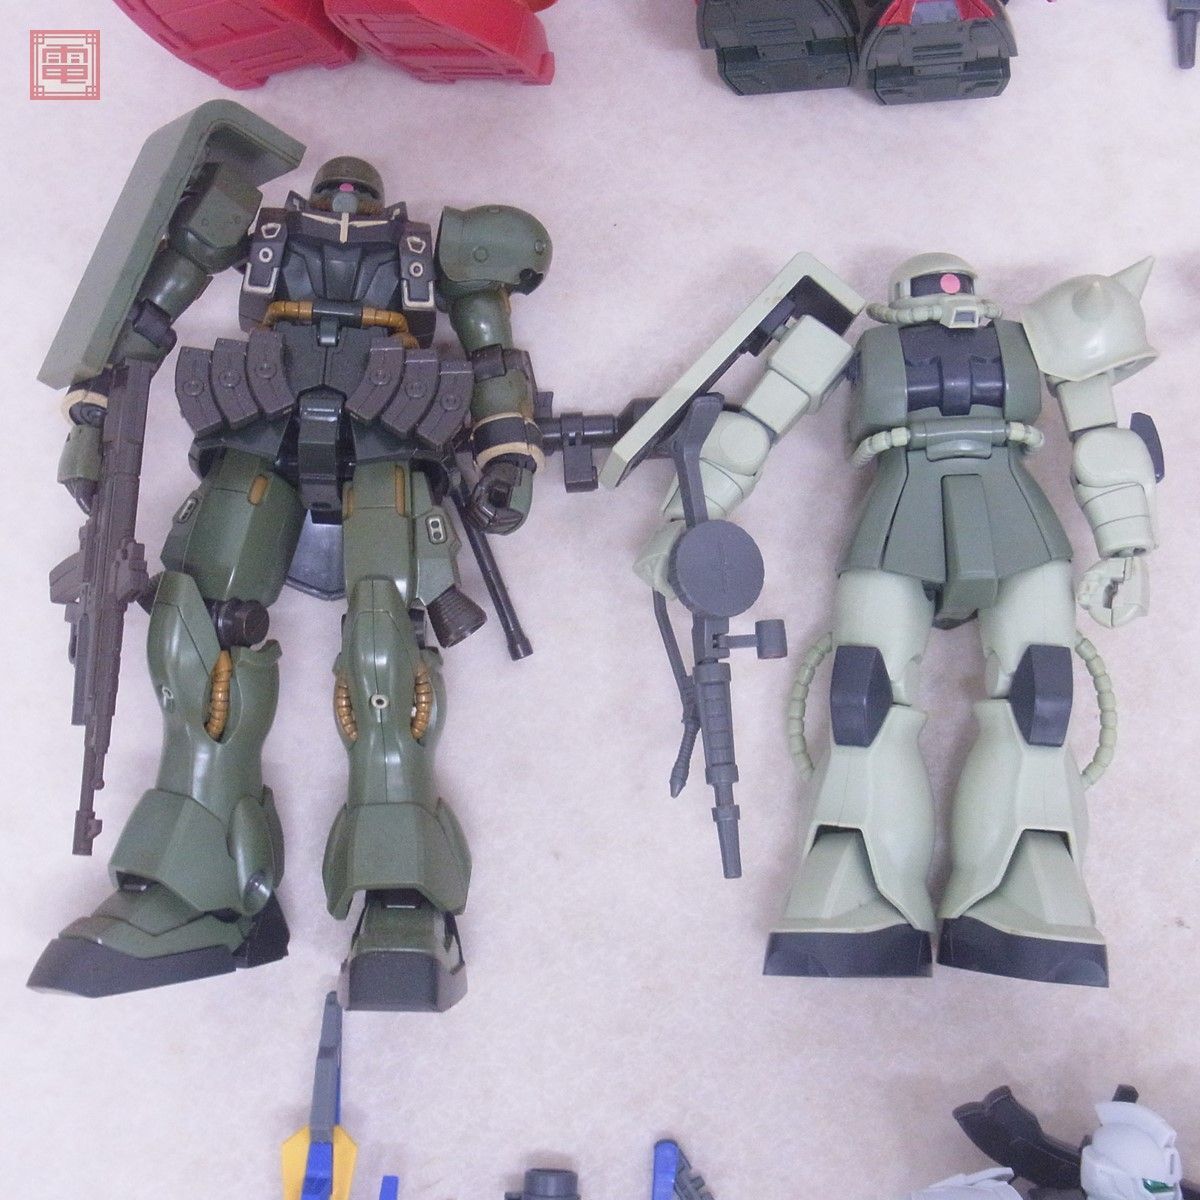  construction settled Bandai HG 1/144mala rhinoceros / Ame i Gin gZ Gundam / Ame i Gin g red Warrior other total 12 point set Junk parts taking .[20